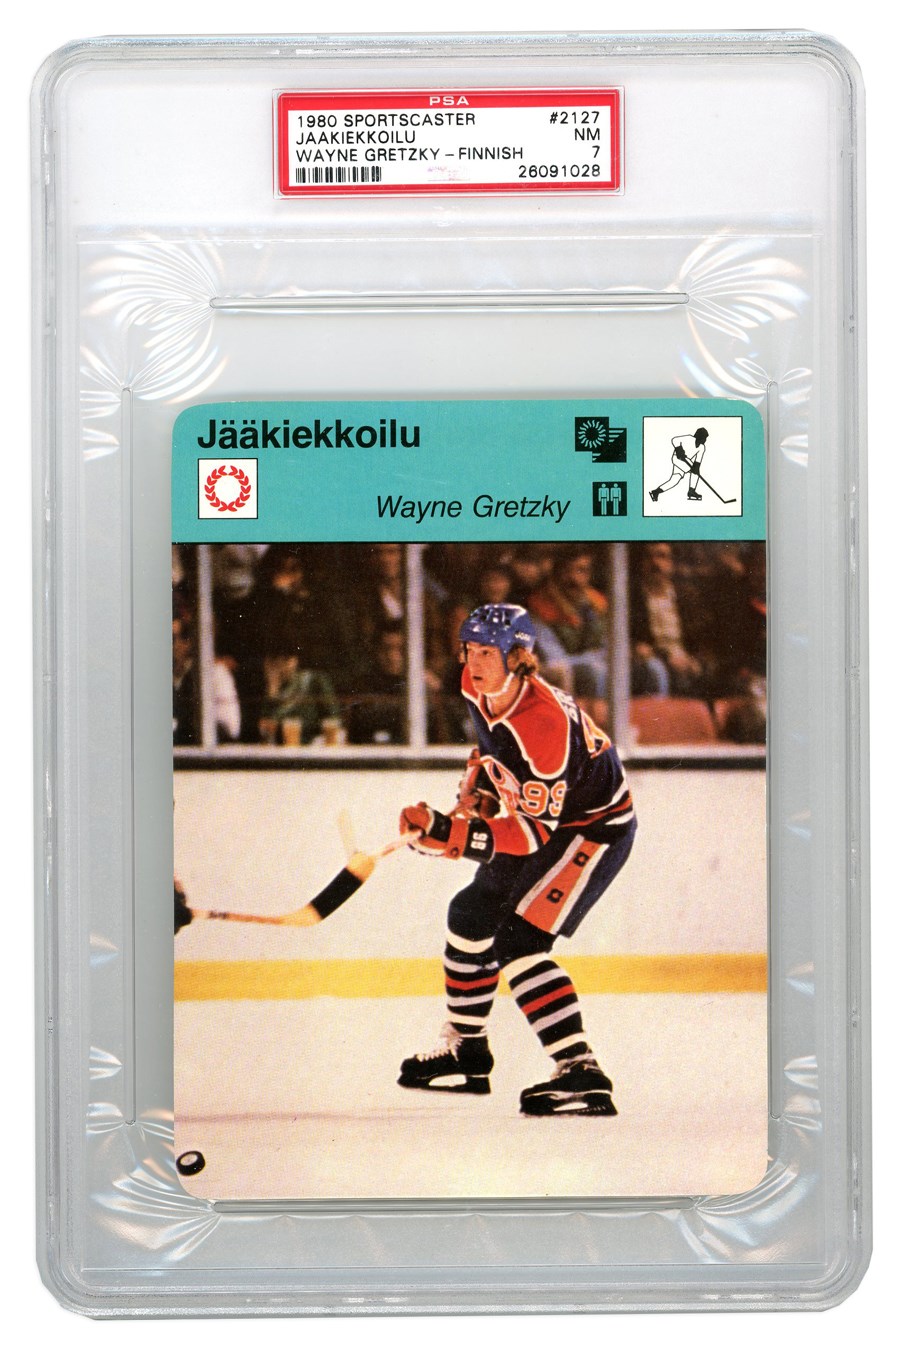 Baseball and Trading Cards - RARE 1980 Wayne Gretzky "Finnish" Sportscaster Hockey Card PSA7 NM